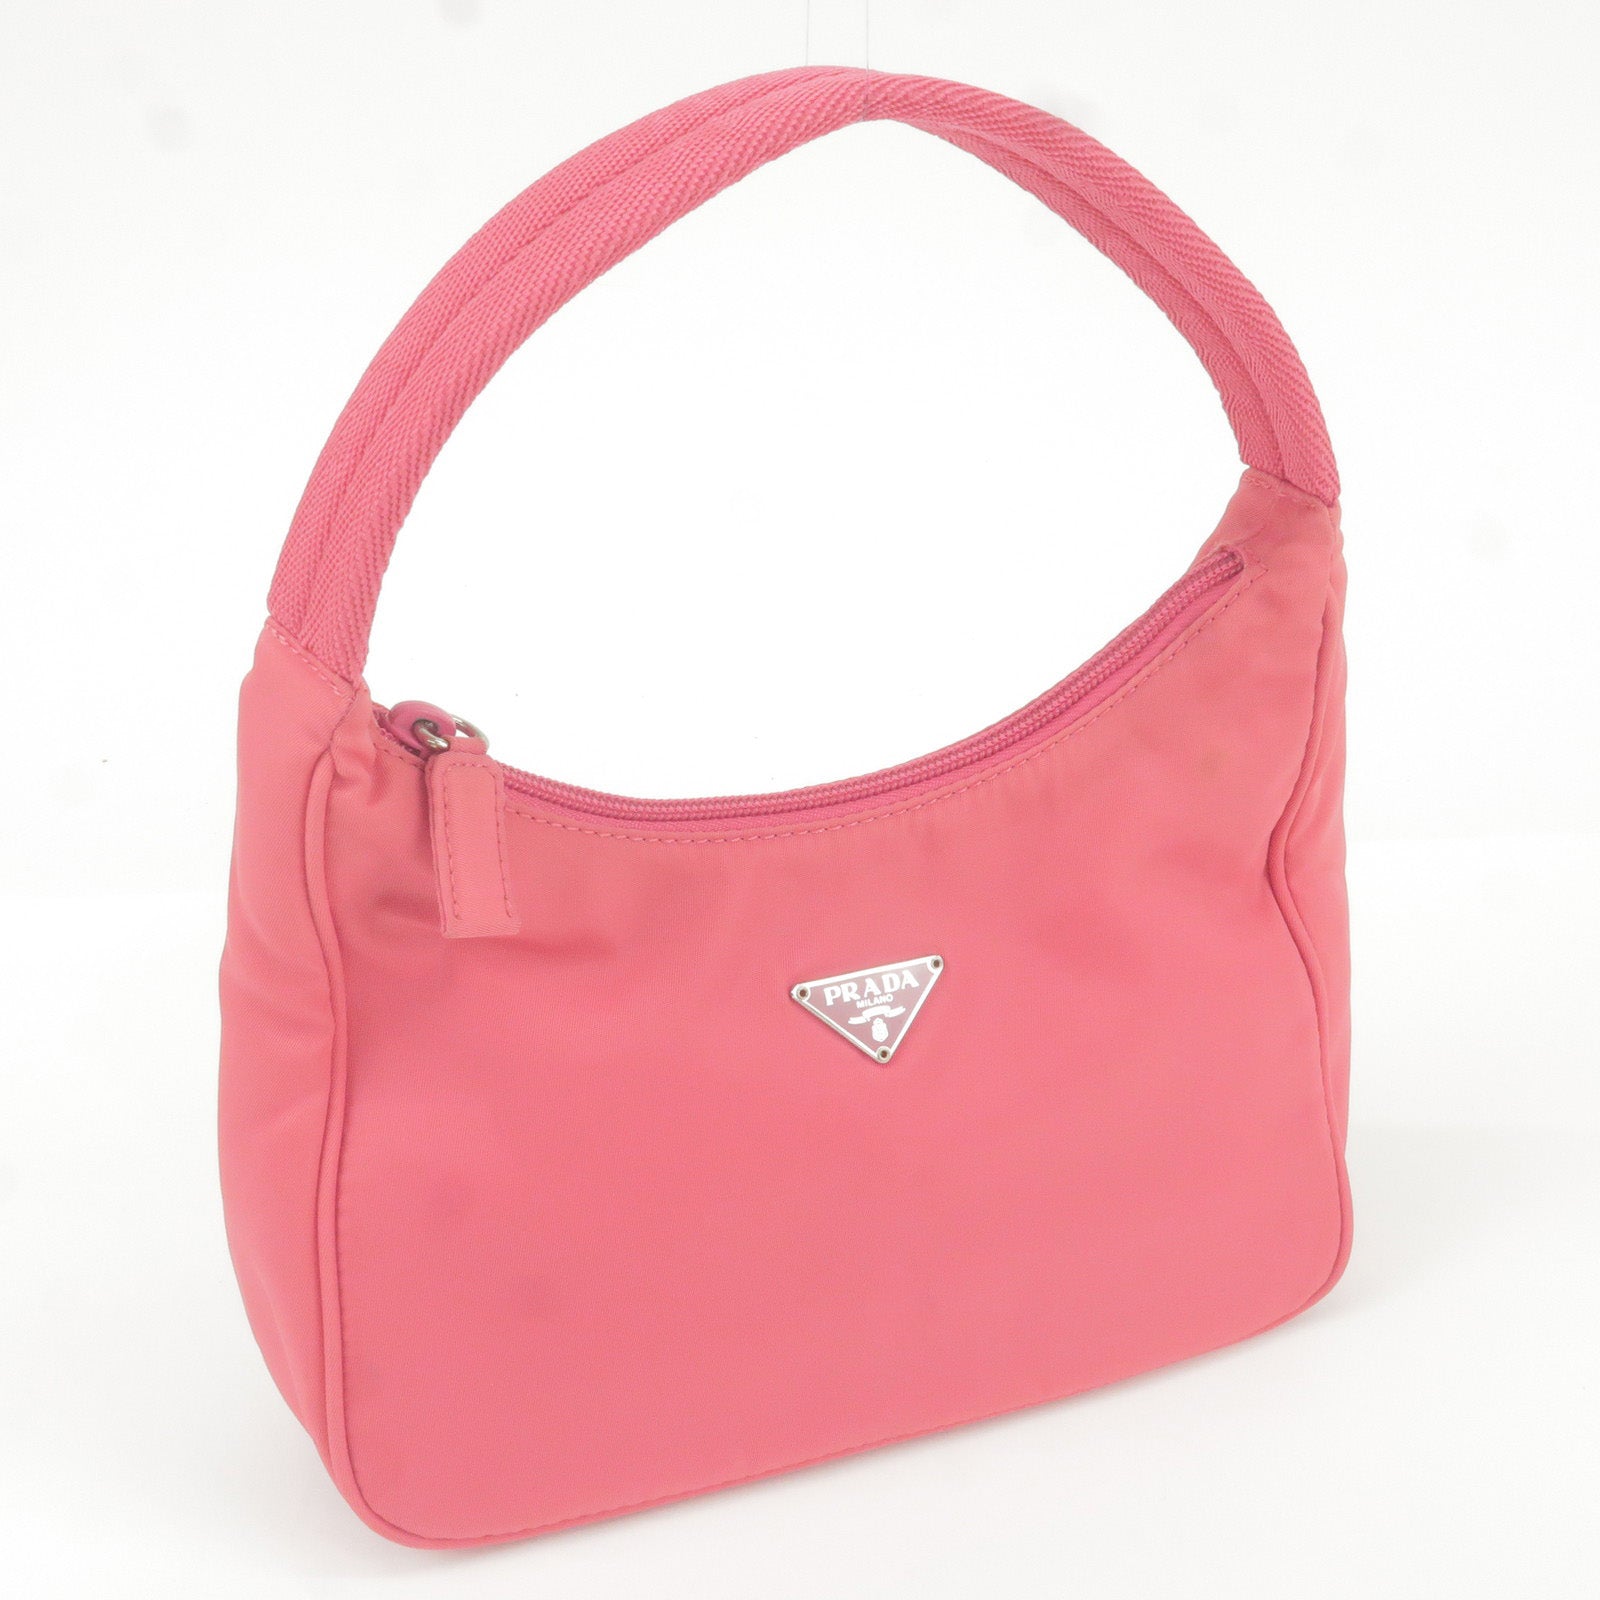 red pink prada leather handbag